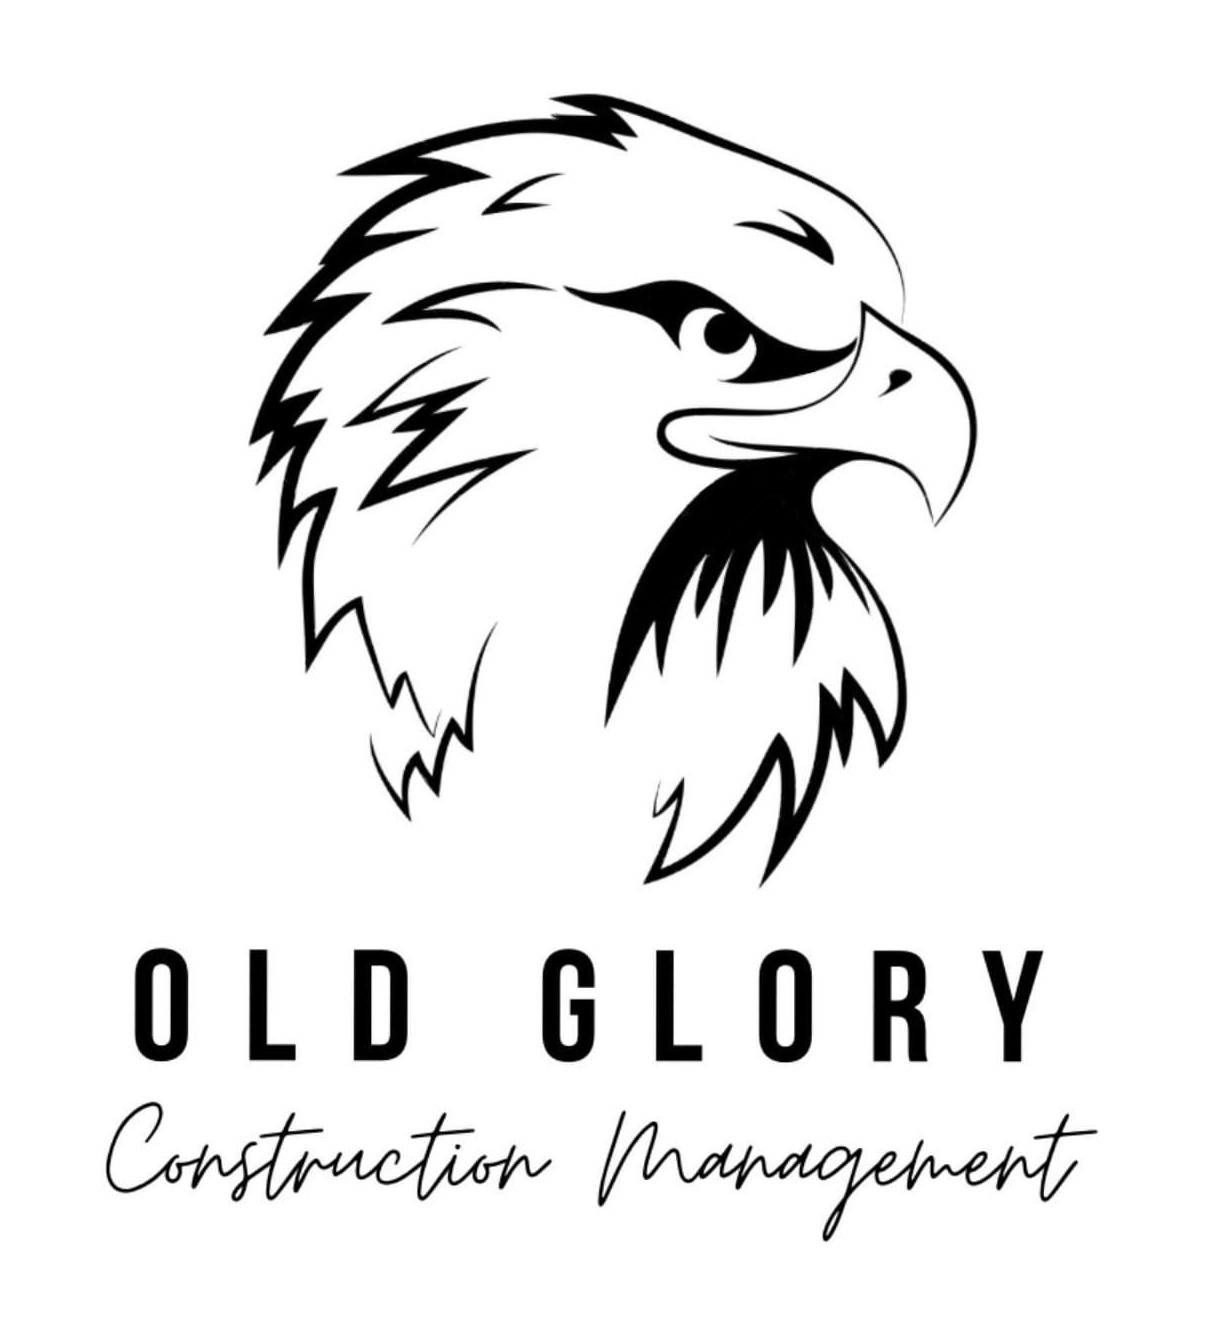 Old Glory Construction Management Logo